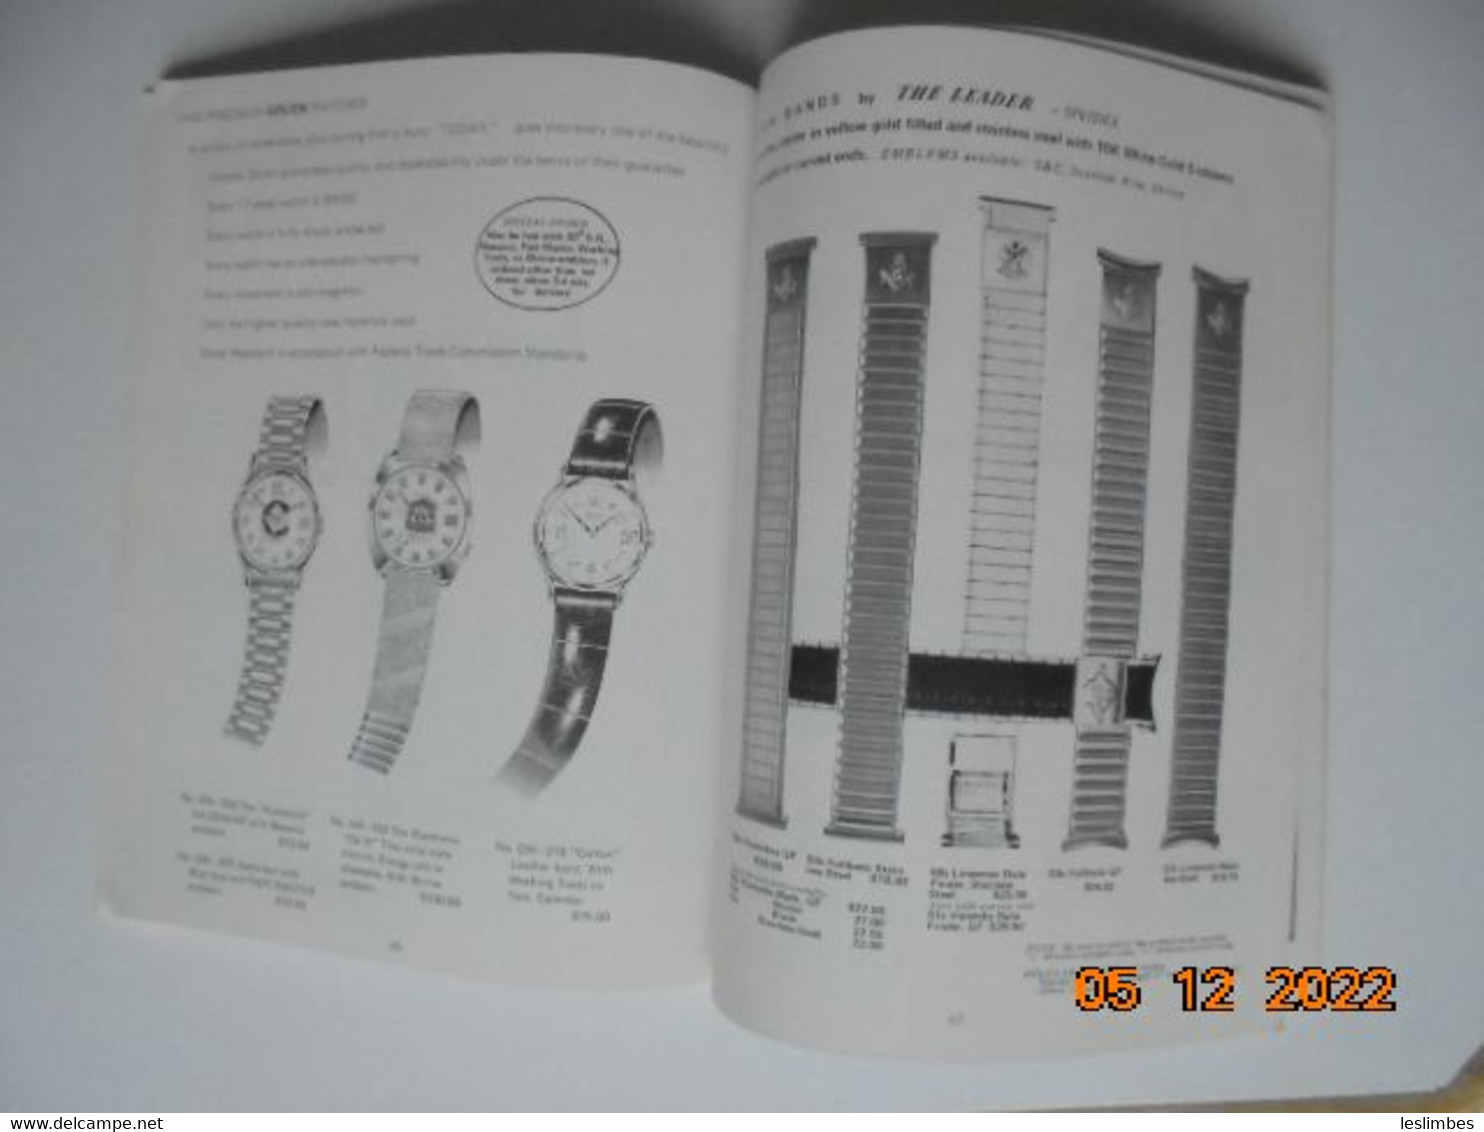 Macoy Publishing & Masonic Supply Company Catalog No.102 (1975): Regalia, Supplies, Jewelry, Bibles, Books, Gifts - 1950-Oggi